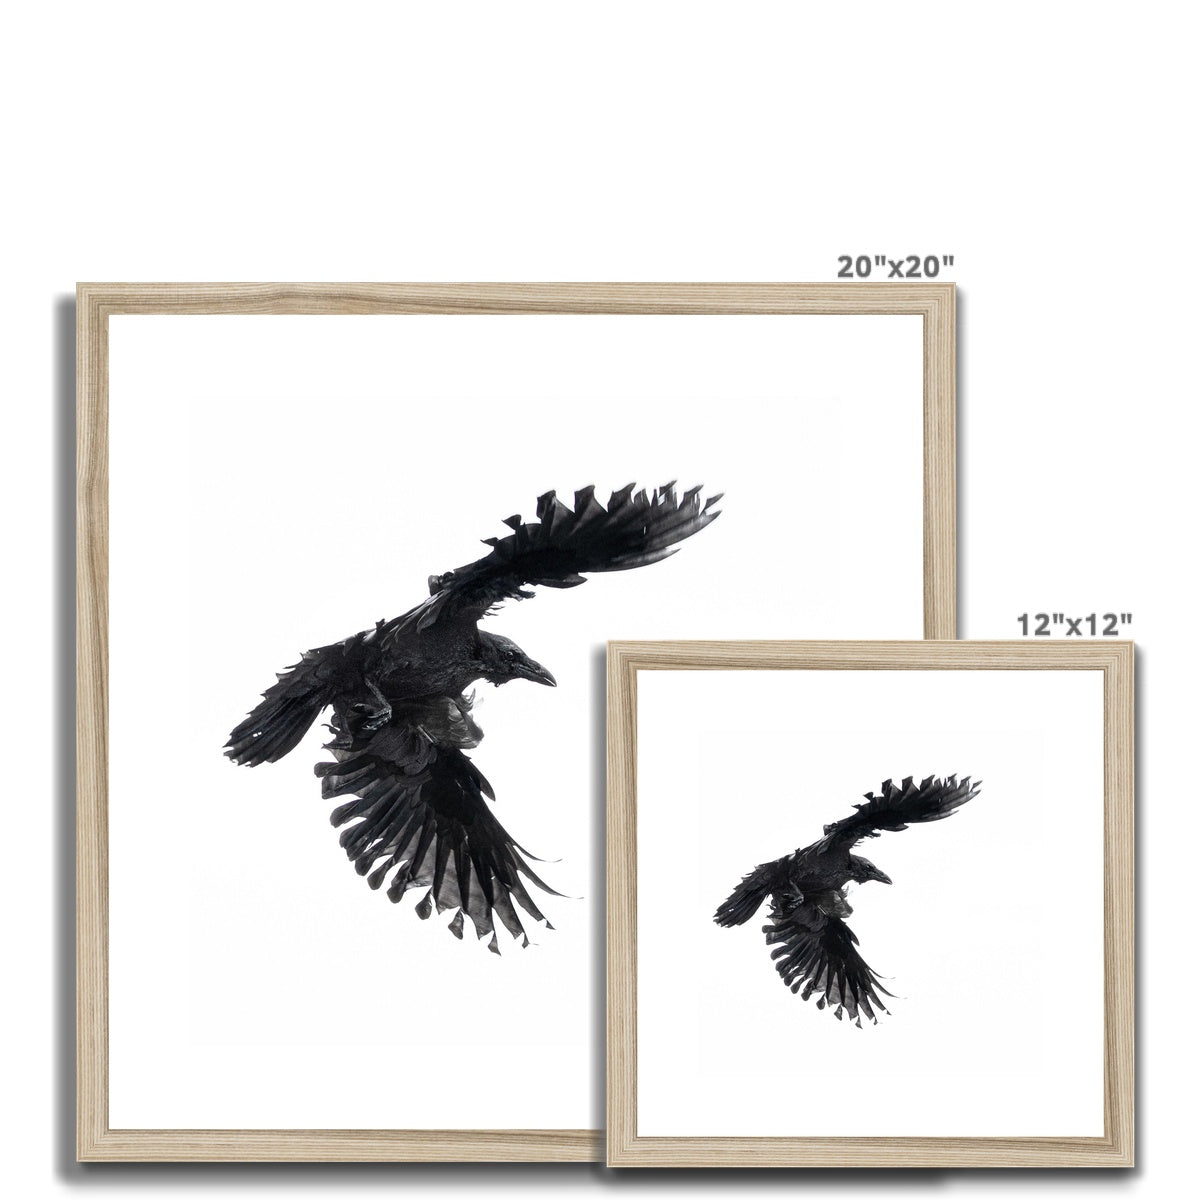 Raven 1 Framed & Mounted Print